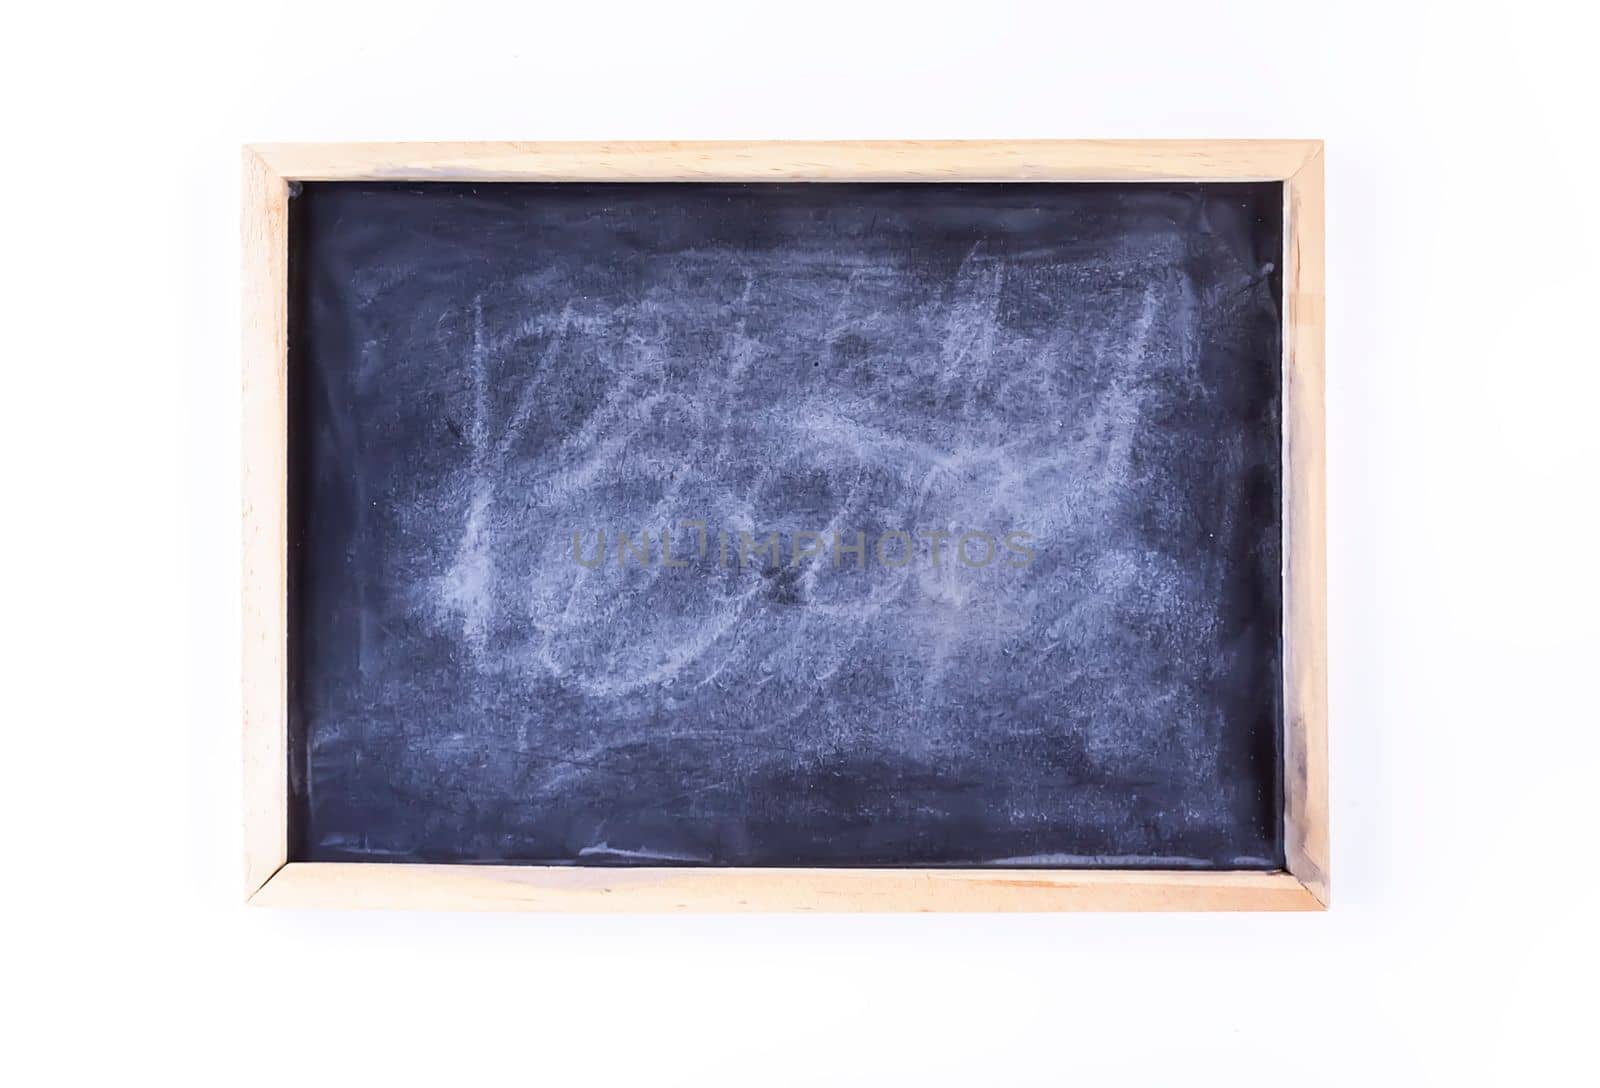 Chalkboard on a white background. by nightlyviolet